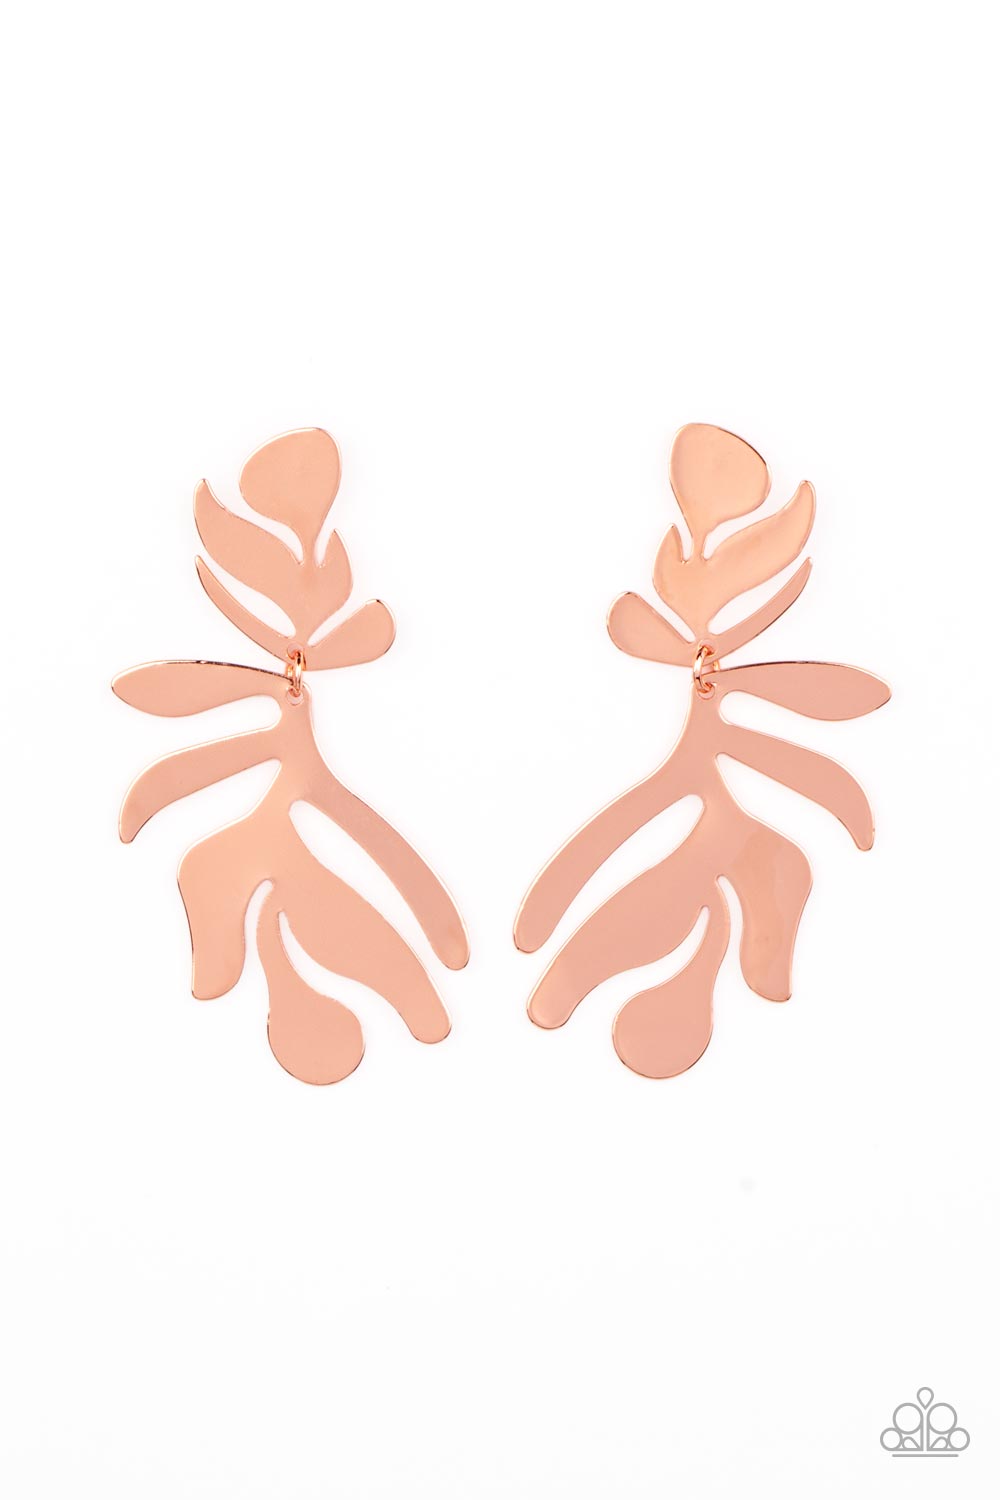 Earrings - Palm Picnic - Copper